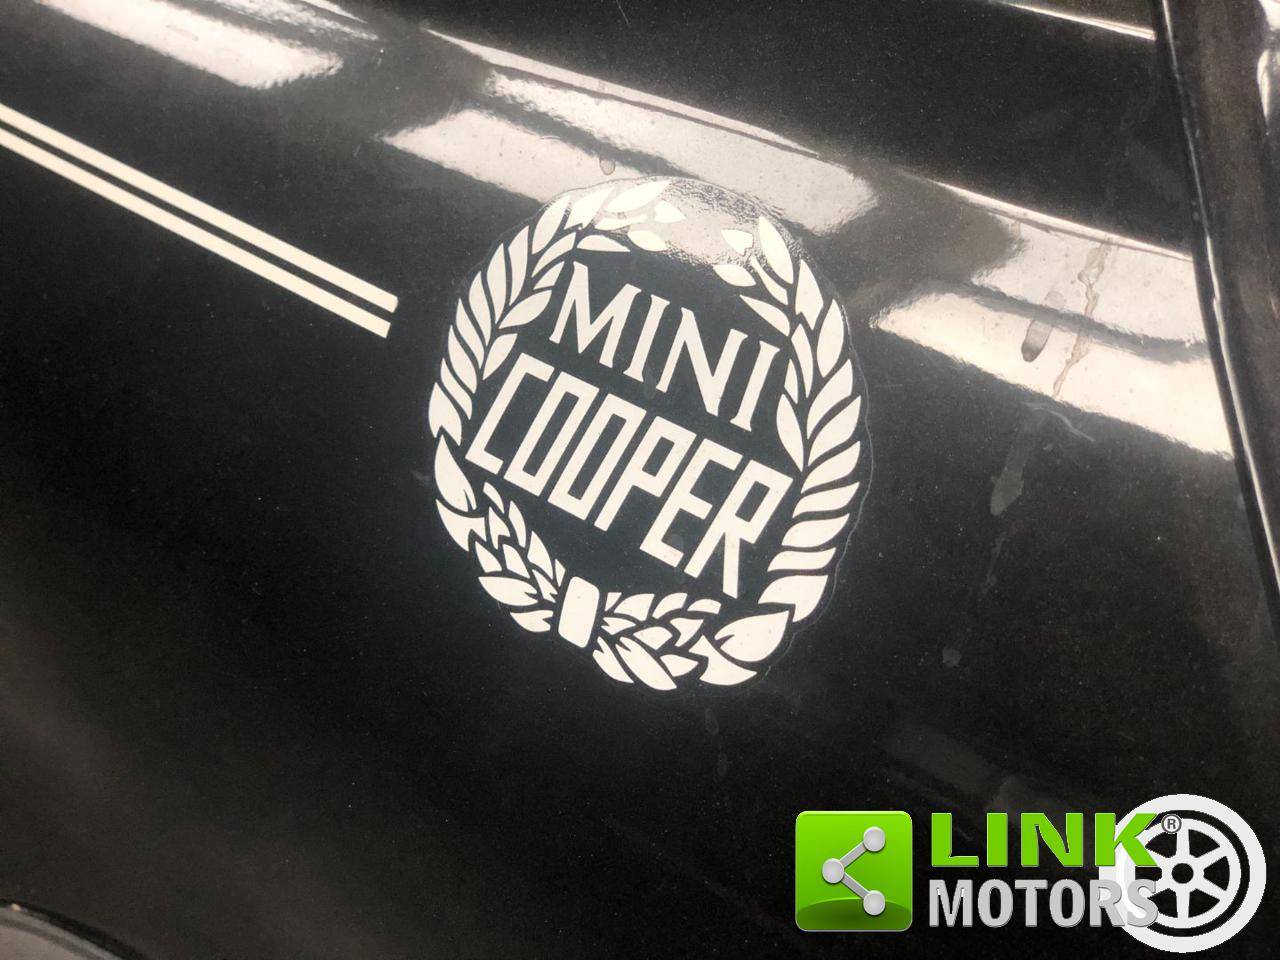 Mini Cooper With Laurel Emblem Sticker